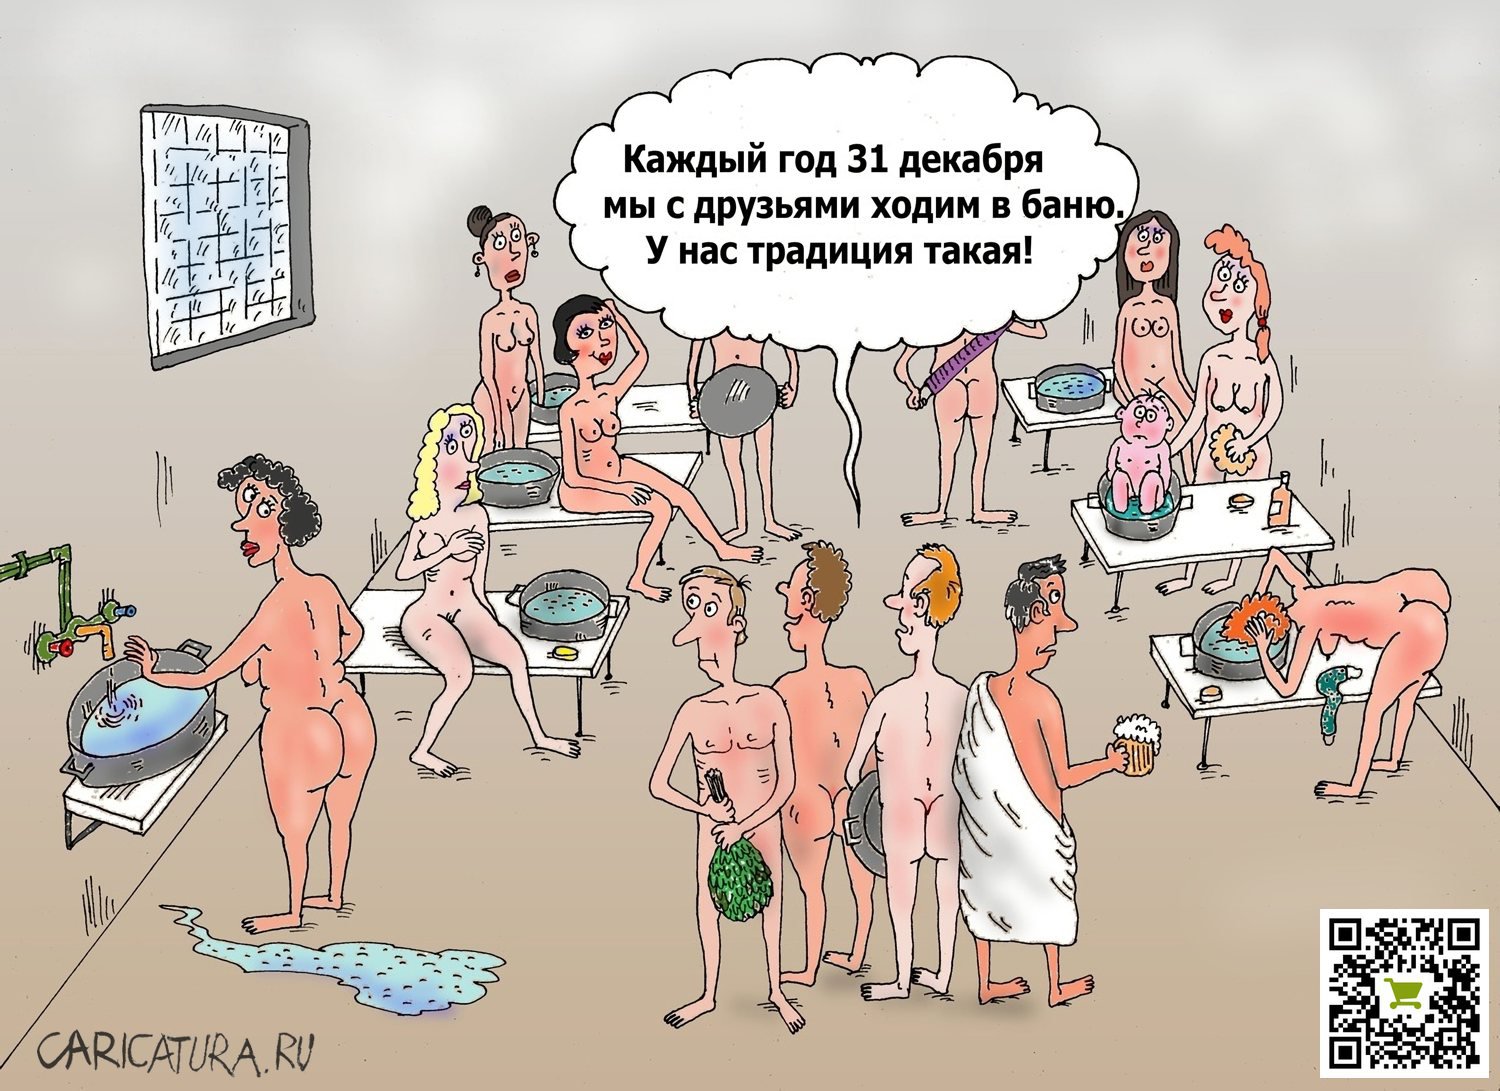 real-watch.ru: Скандал! Карикатура ГосСМИ отобразило украинских солдат в виде свиней